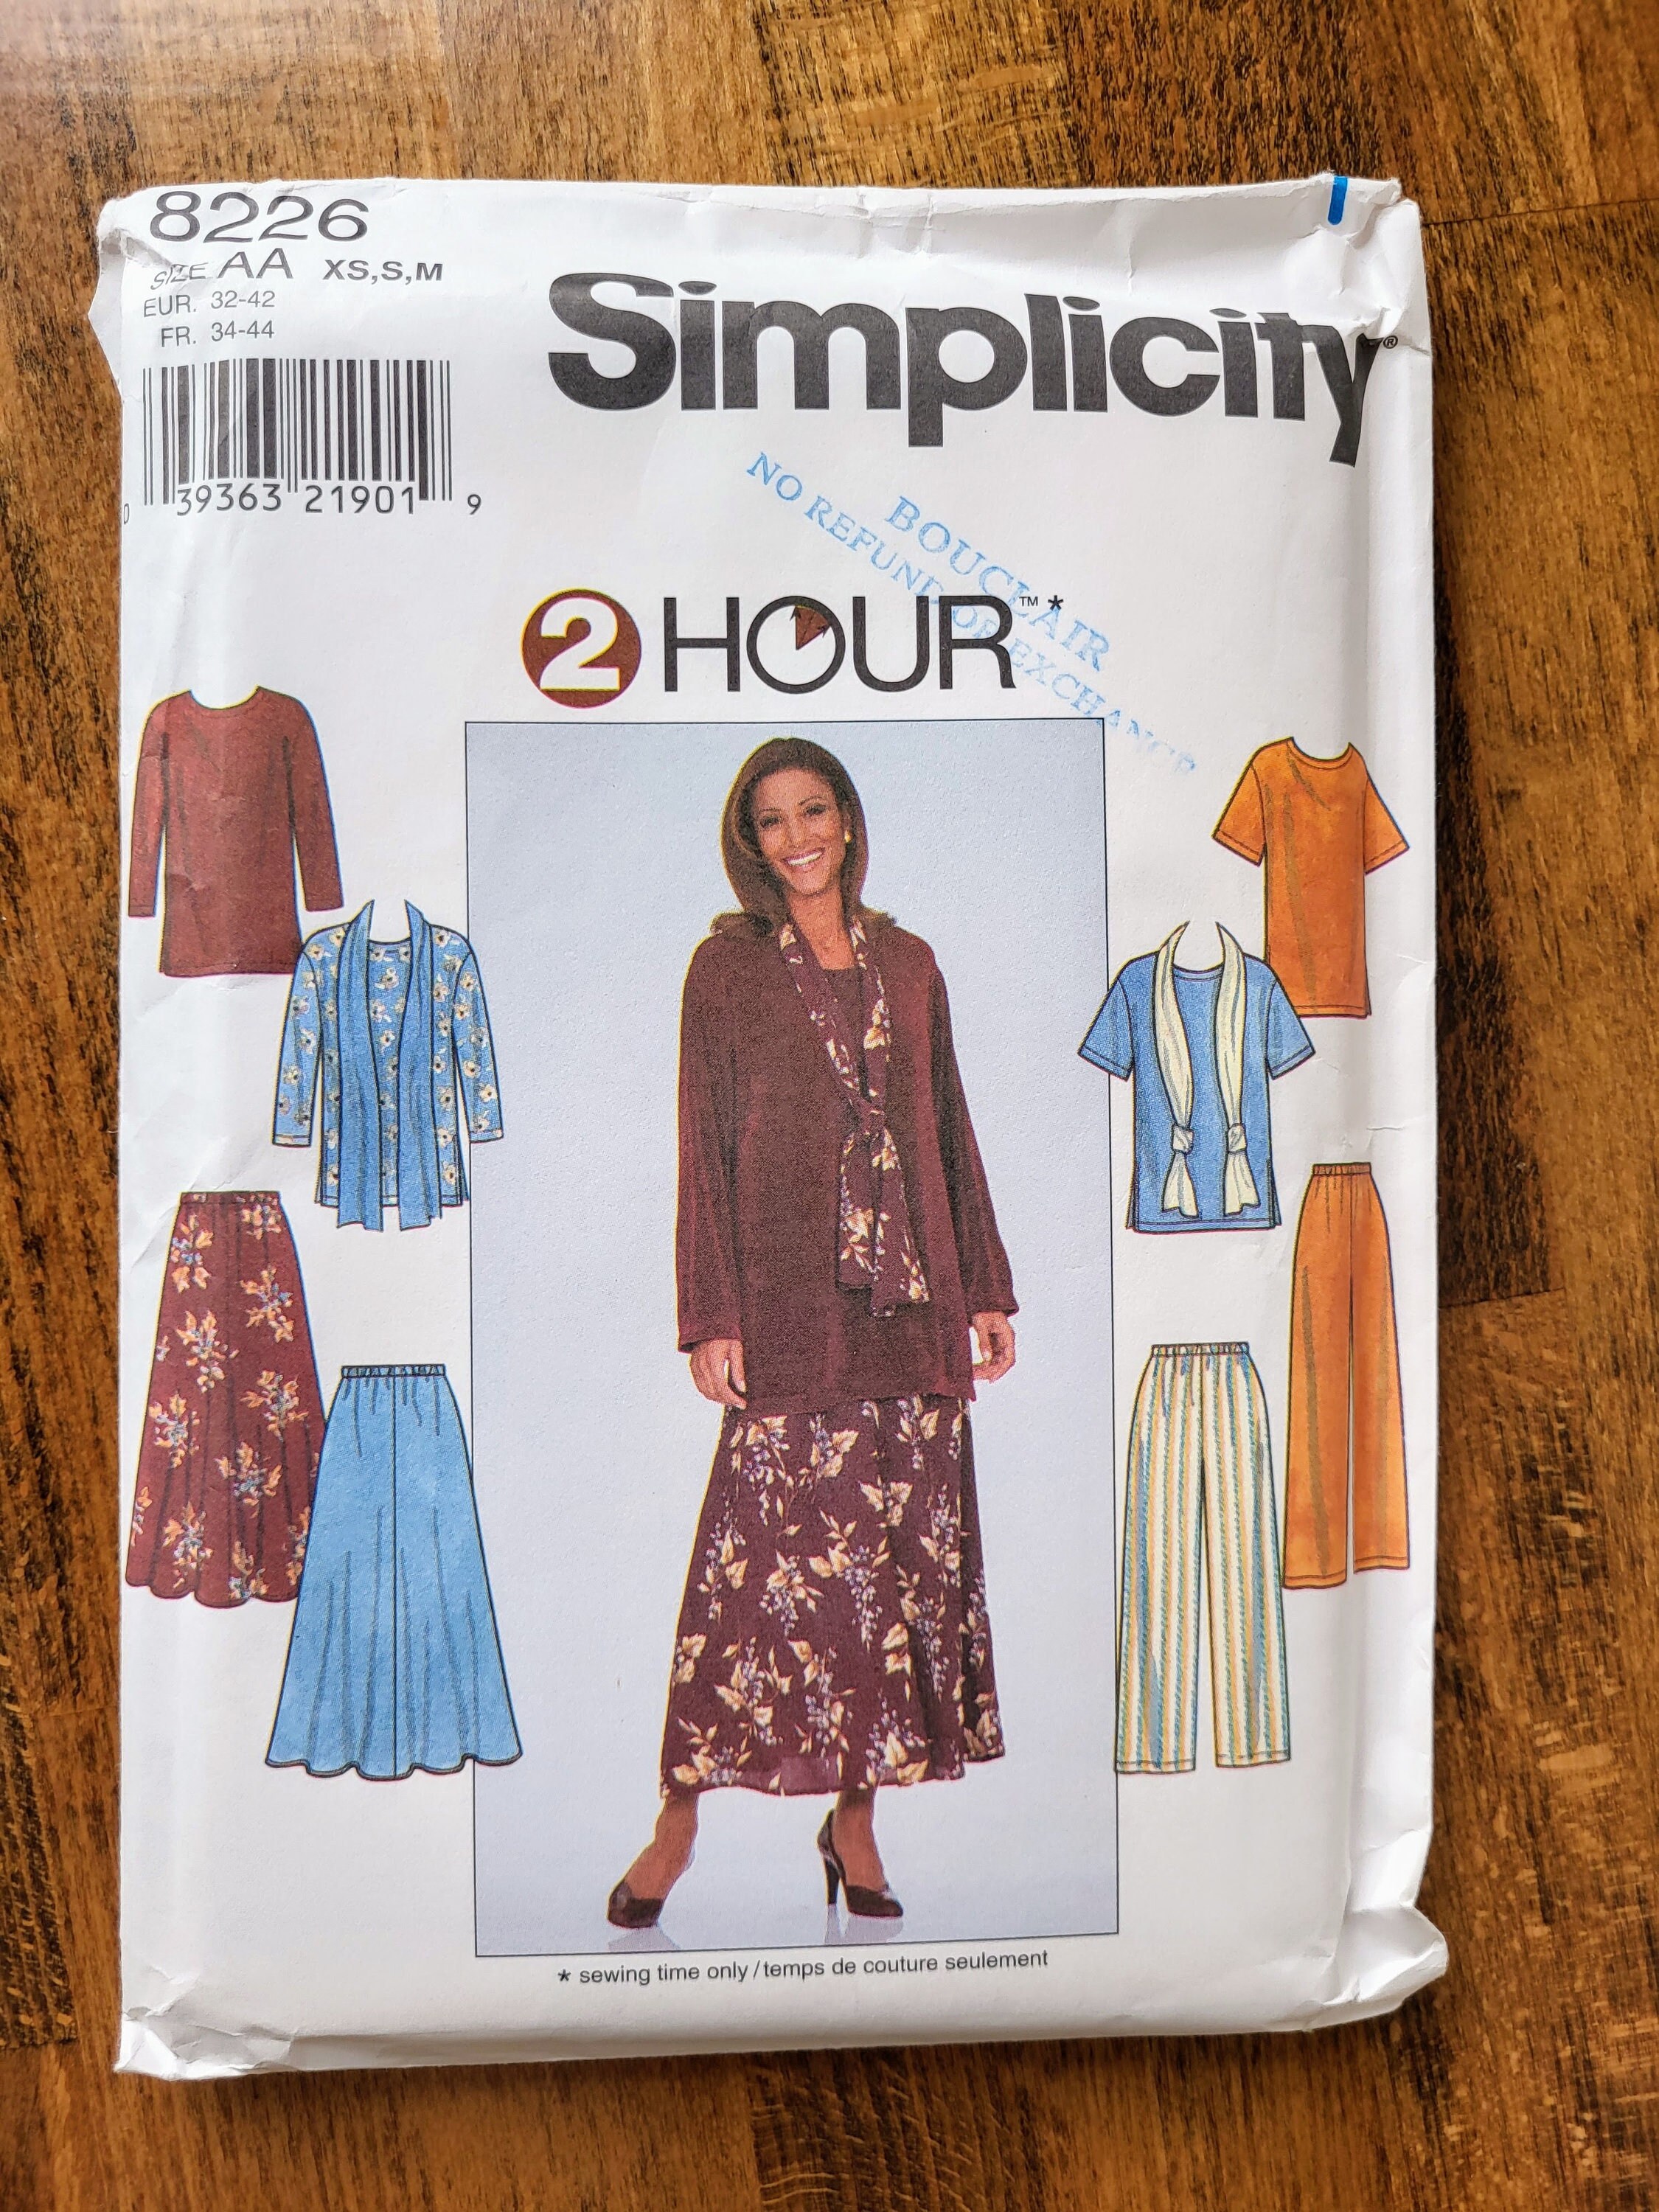 1970s Misses Jacket Skirt Pants Simplicity 6859 Vintage Sewing Pattern Size  12 Bust 34 UNCUT -  Canada